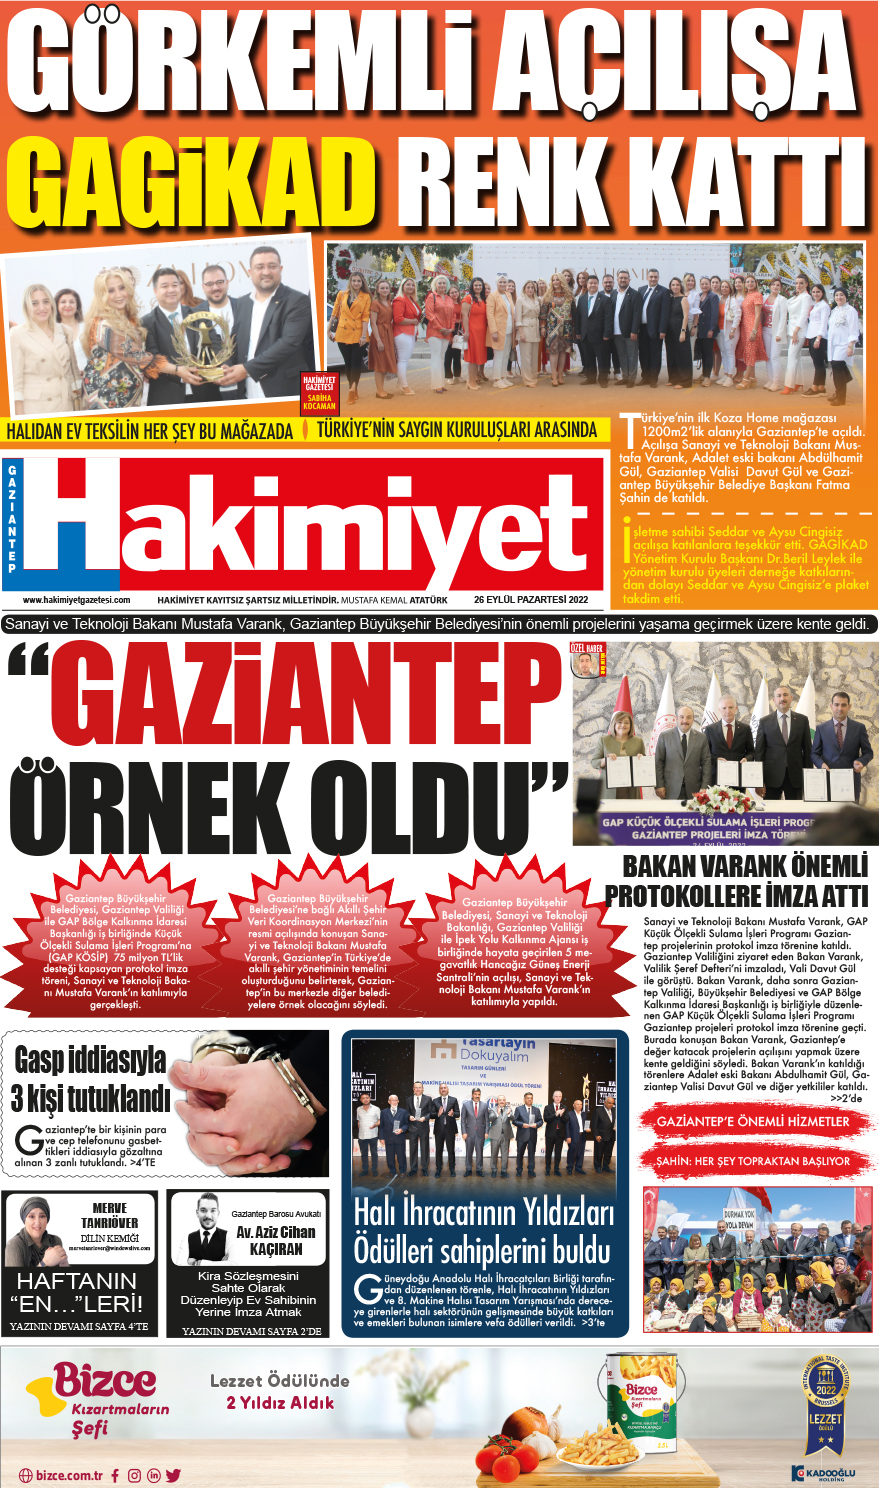 26 Eylül 2022 Gaziantep Hakimiyet Gazete Manşeti